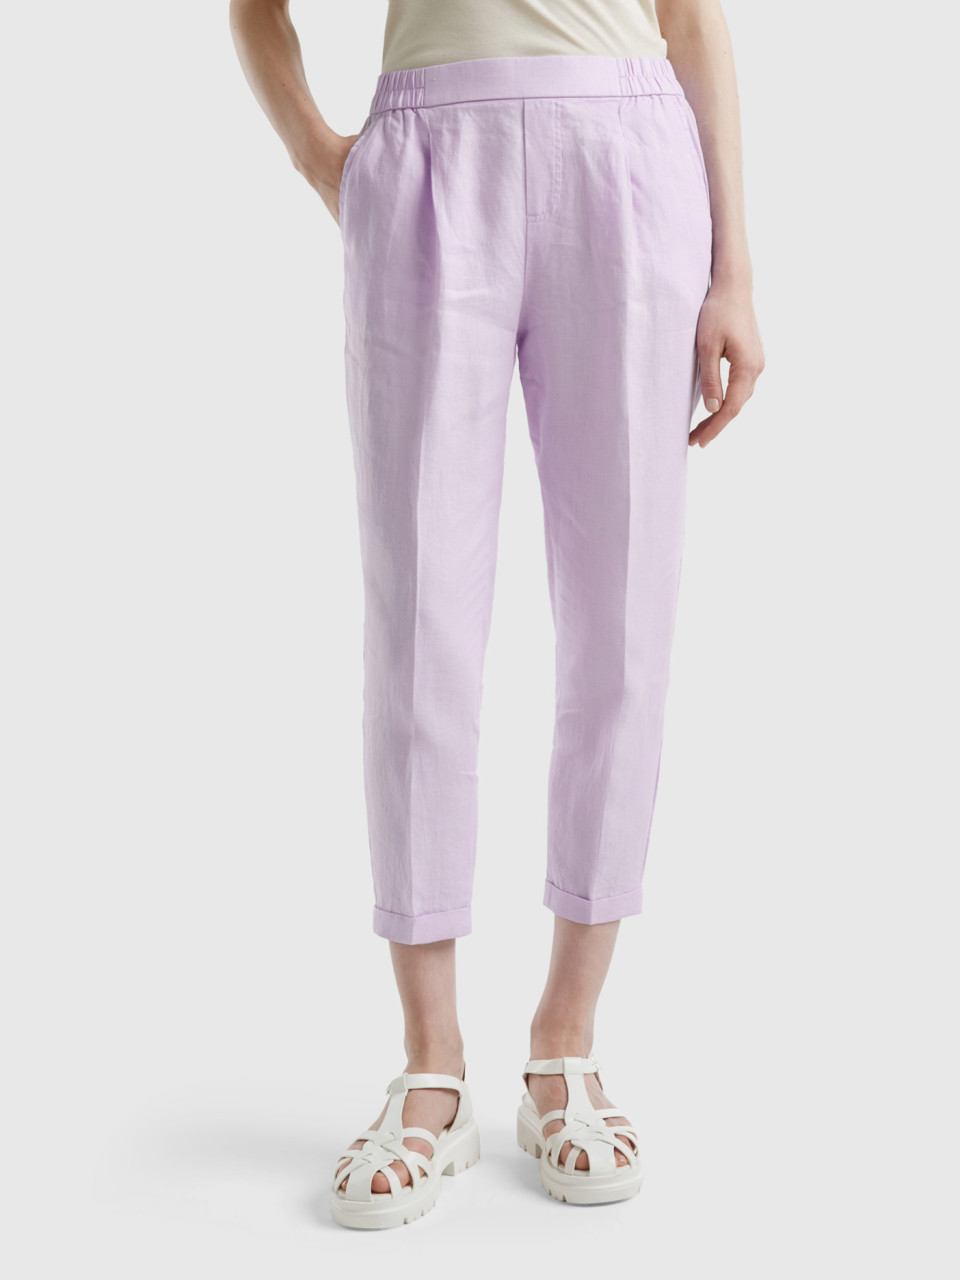 Benetton, Cropped Trousers In 100% Linen, Lilac, Women